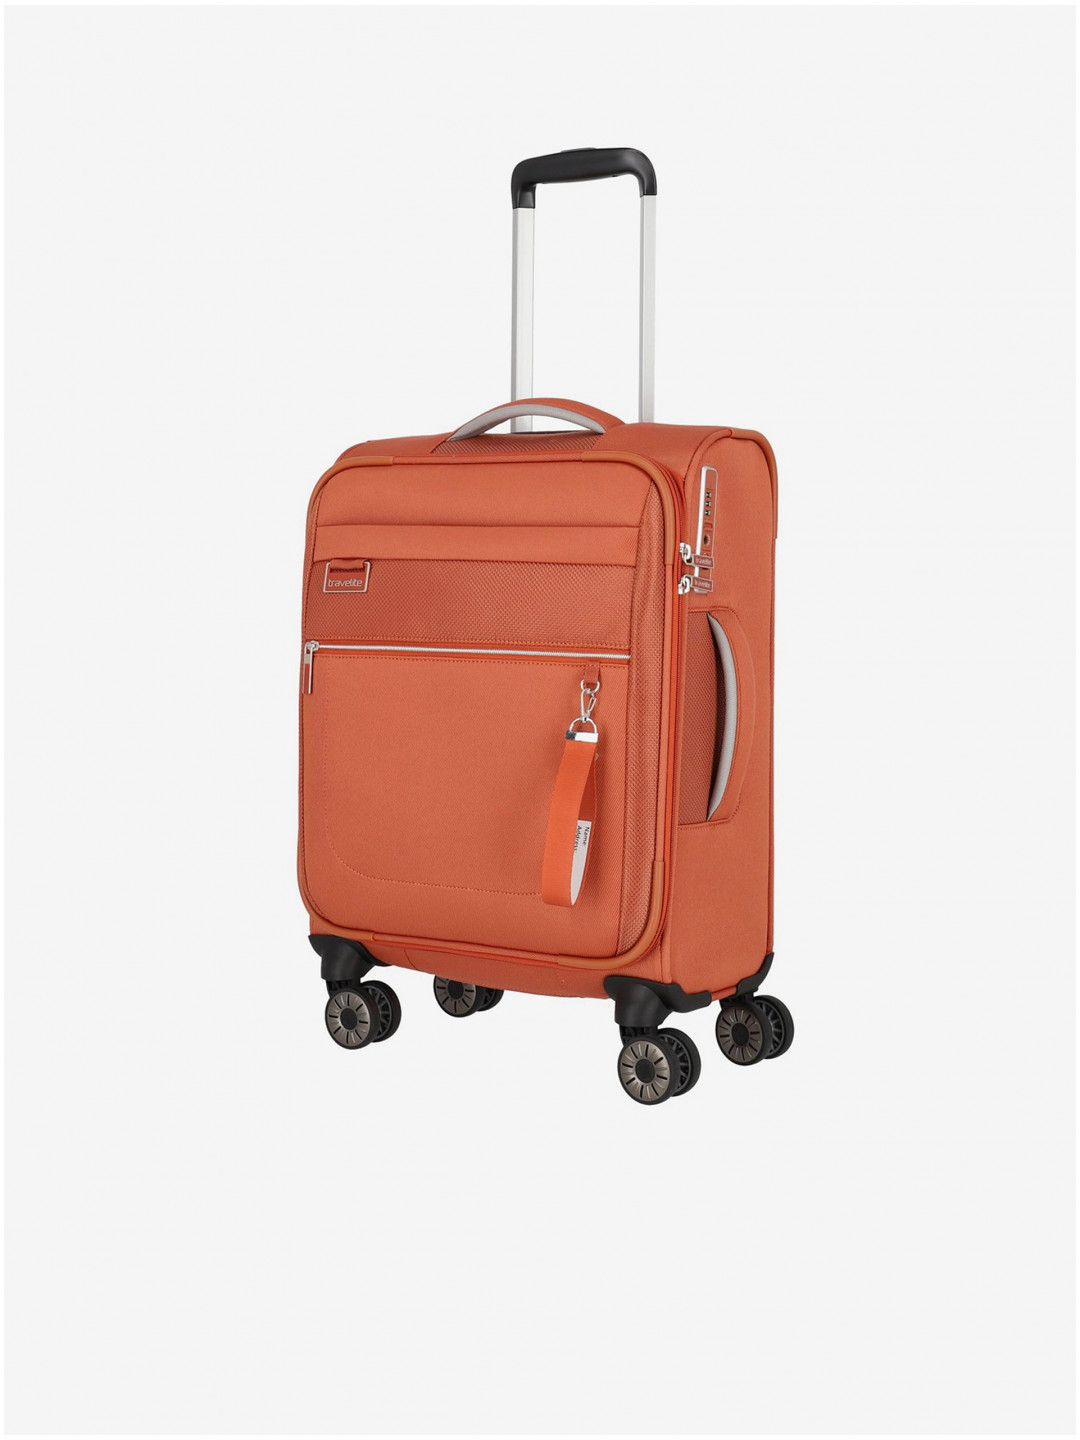 Oranžový cestovní kufr Travelite Miigo 4w S Copper chutney